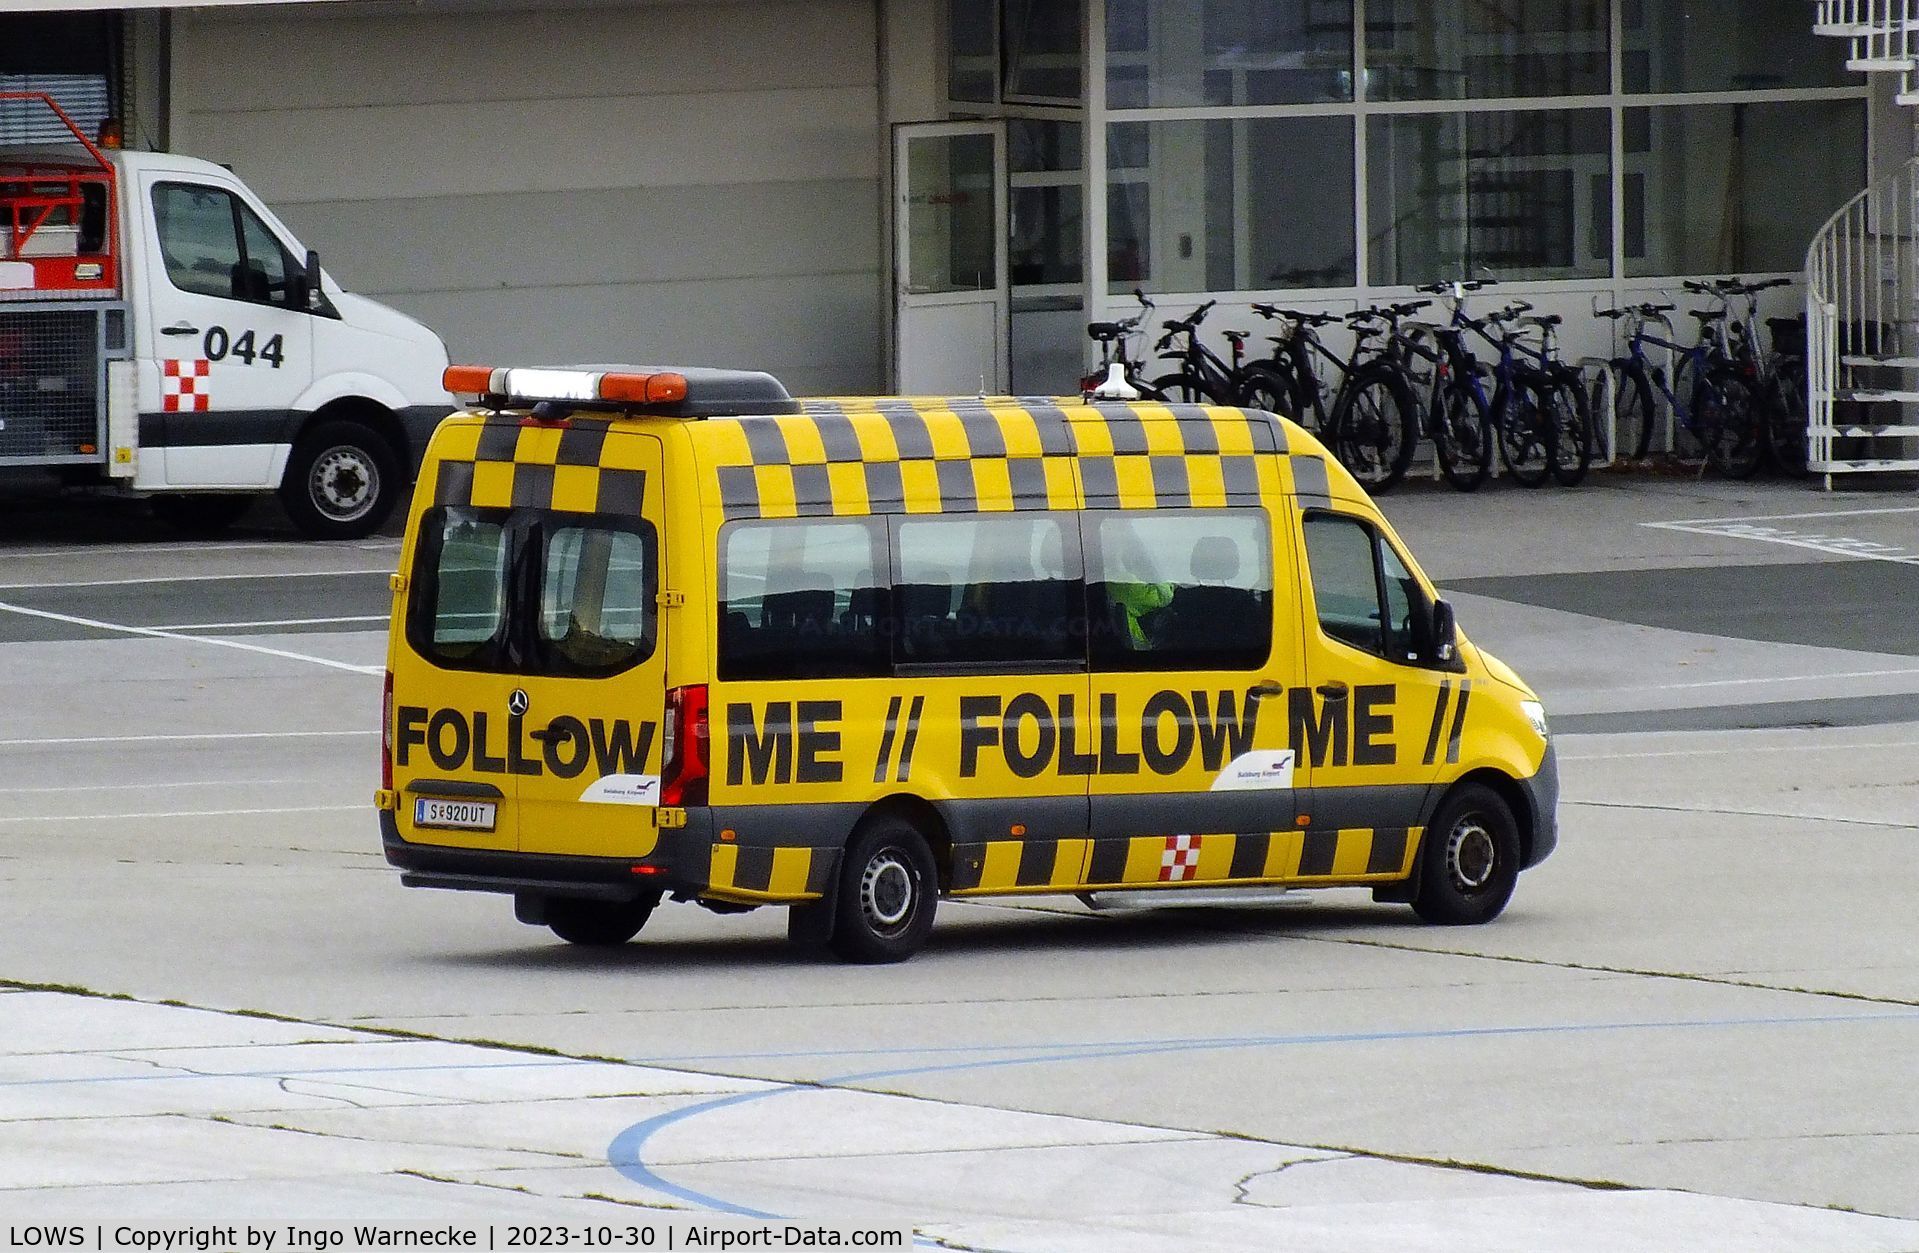 Salzburg Airport, Salzburg Austria (LOWS) - Follow-Me vehicle at Salzburg airport